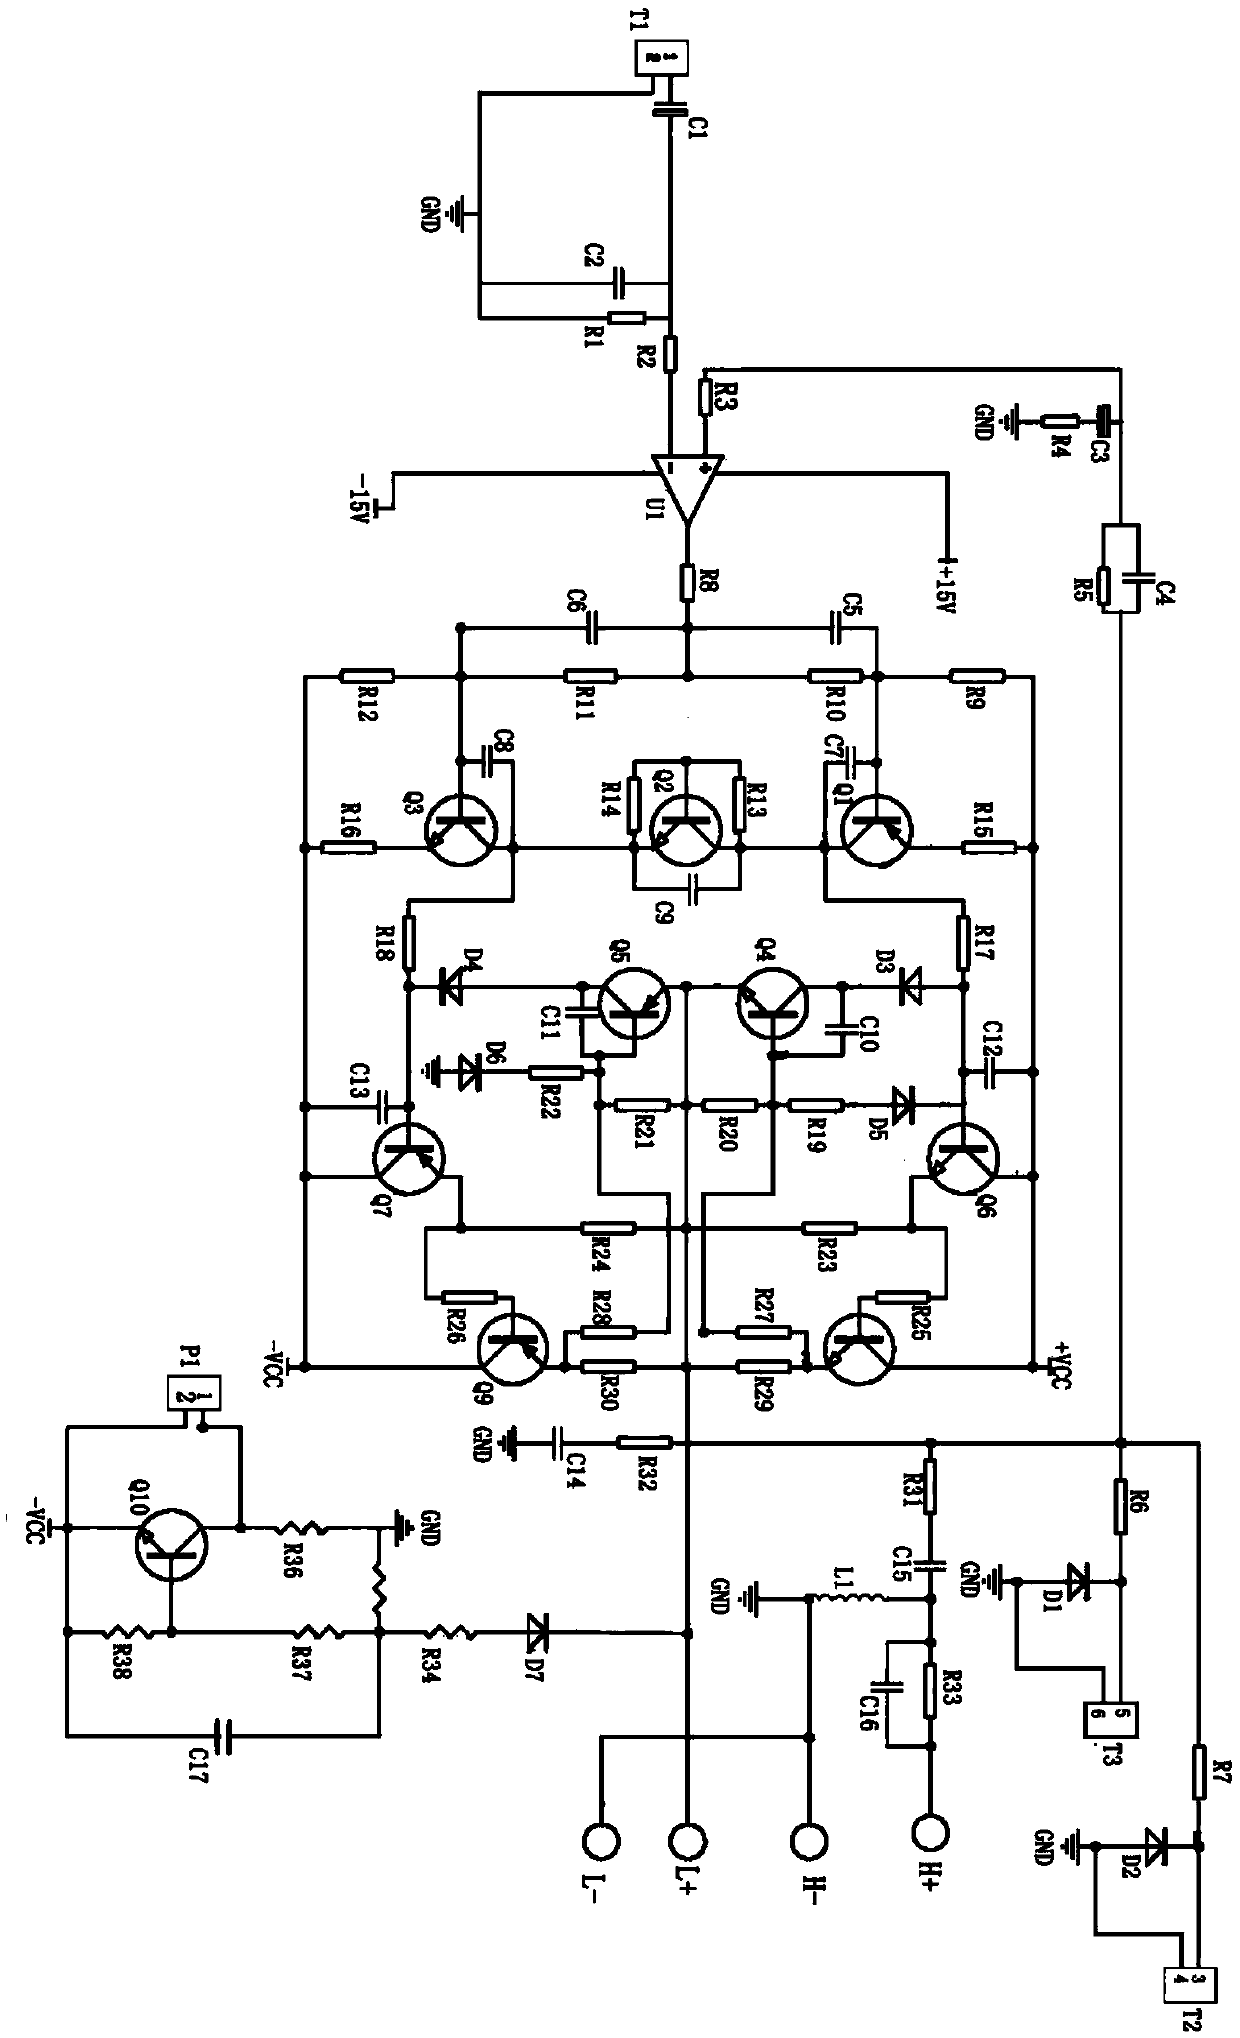 Loudspeaker box power amplification circuit